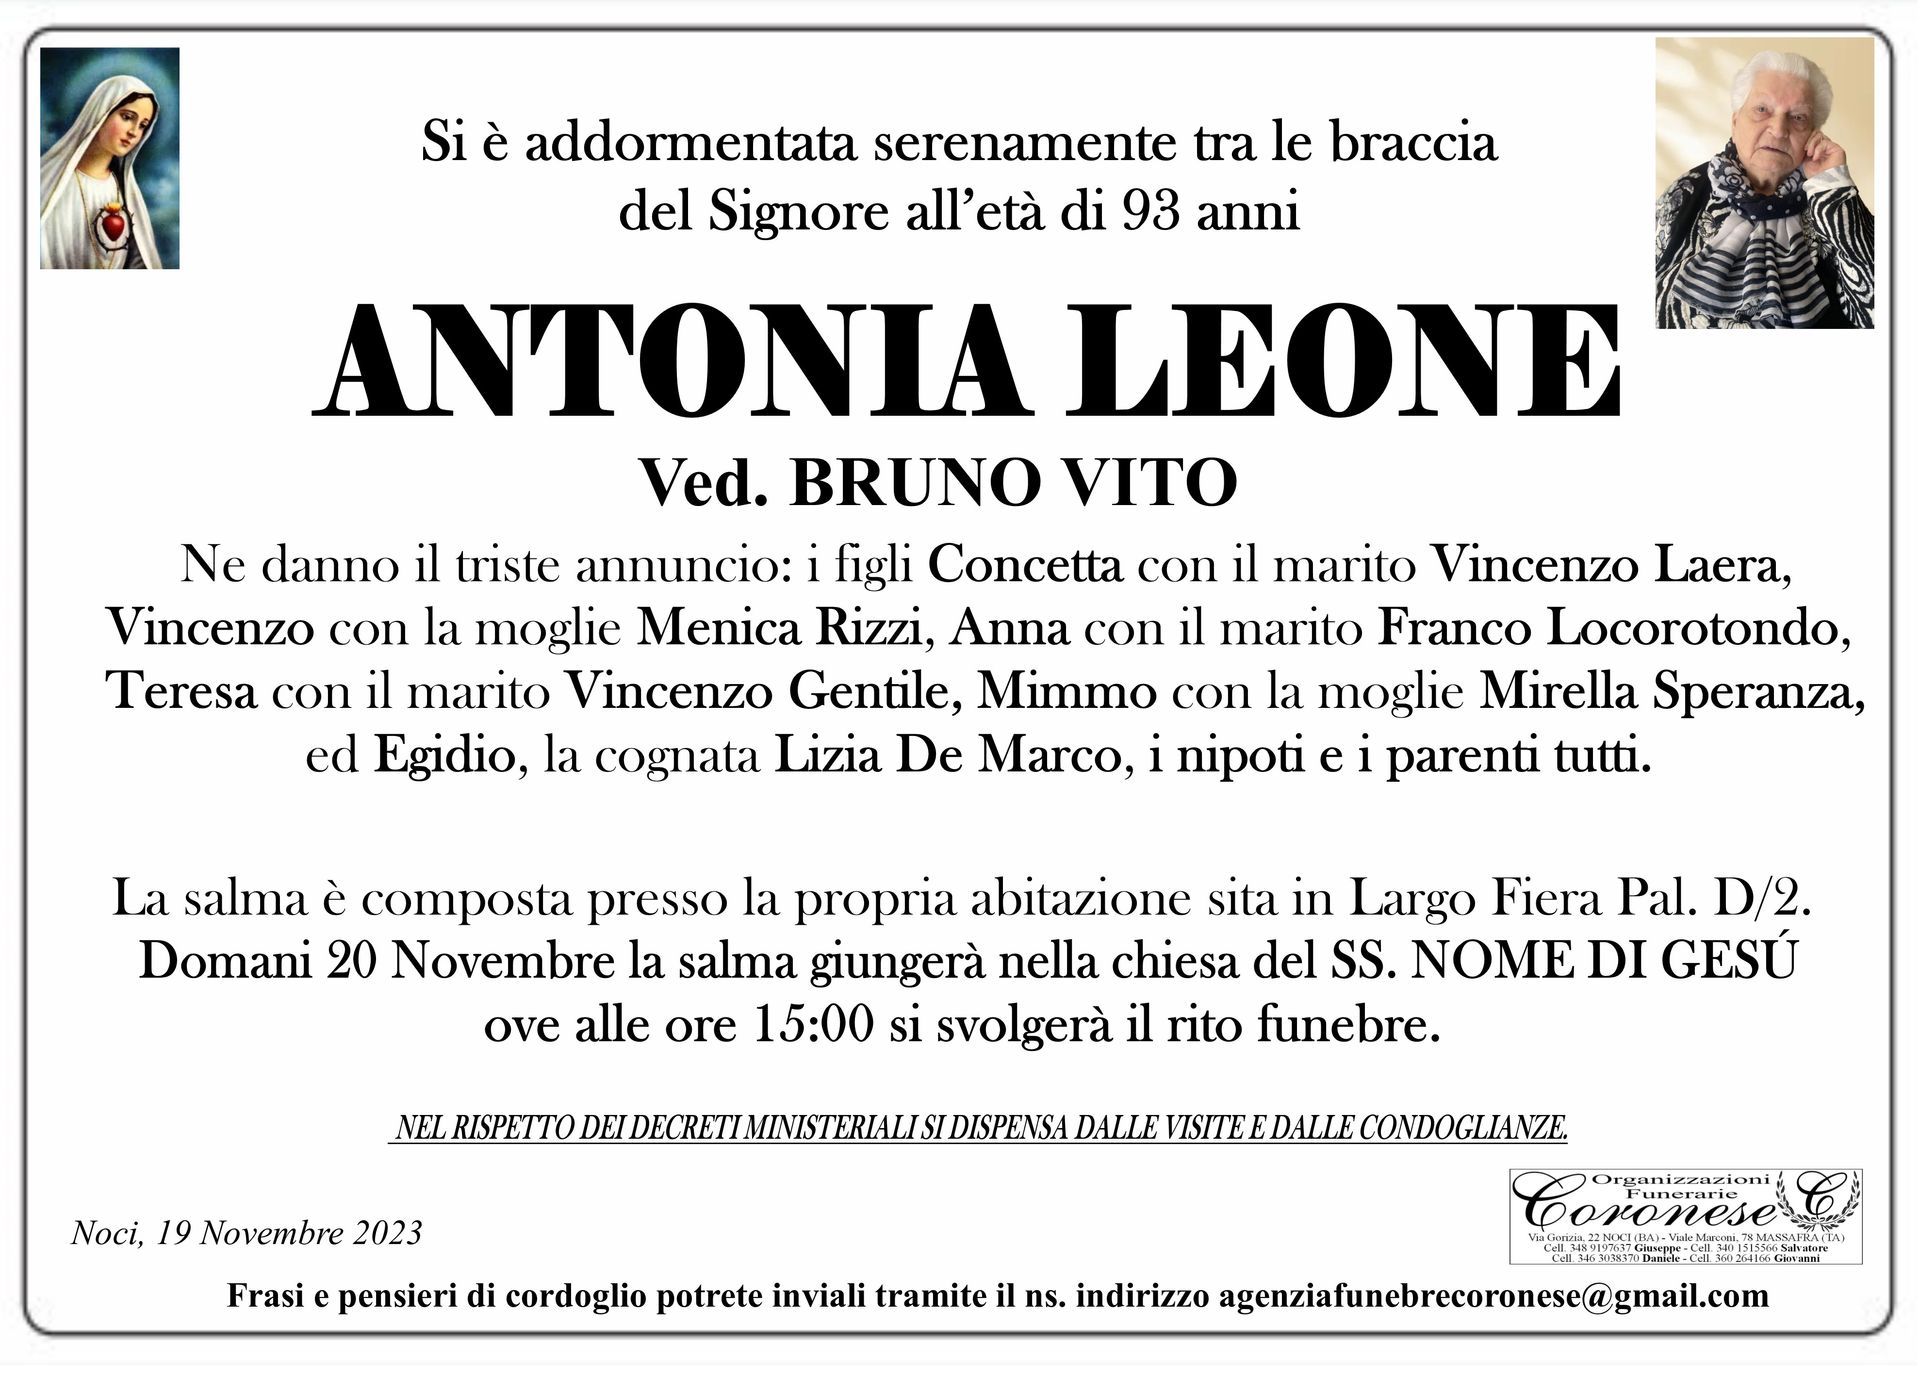 necrologio ANTONIA LEONE Ved. BRUNO